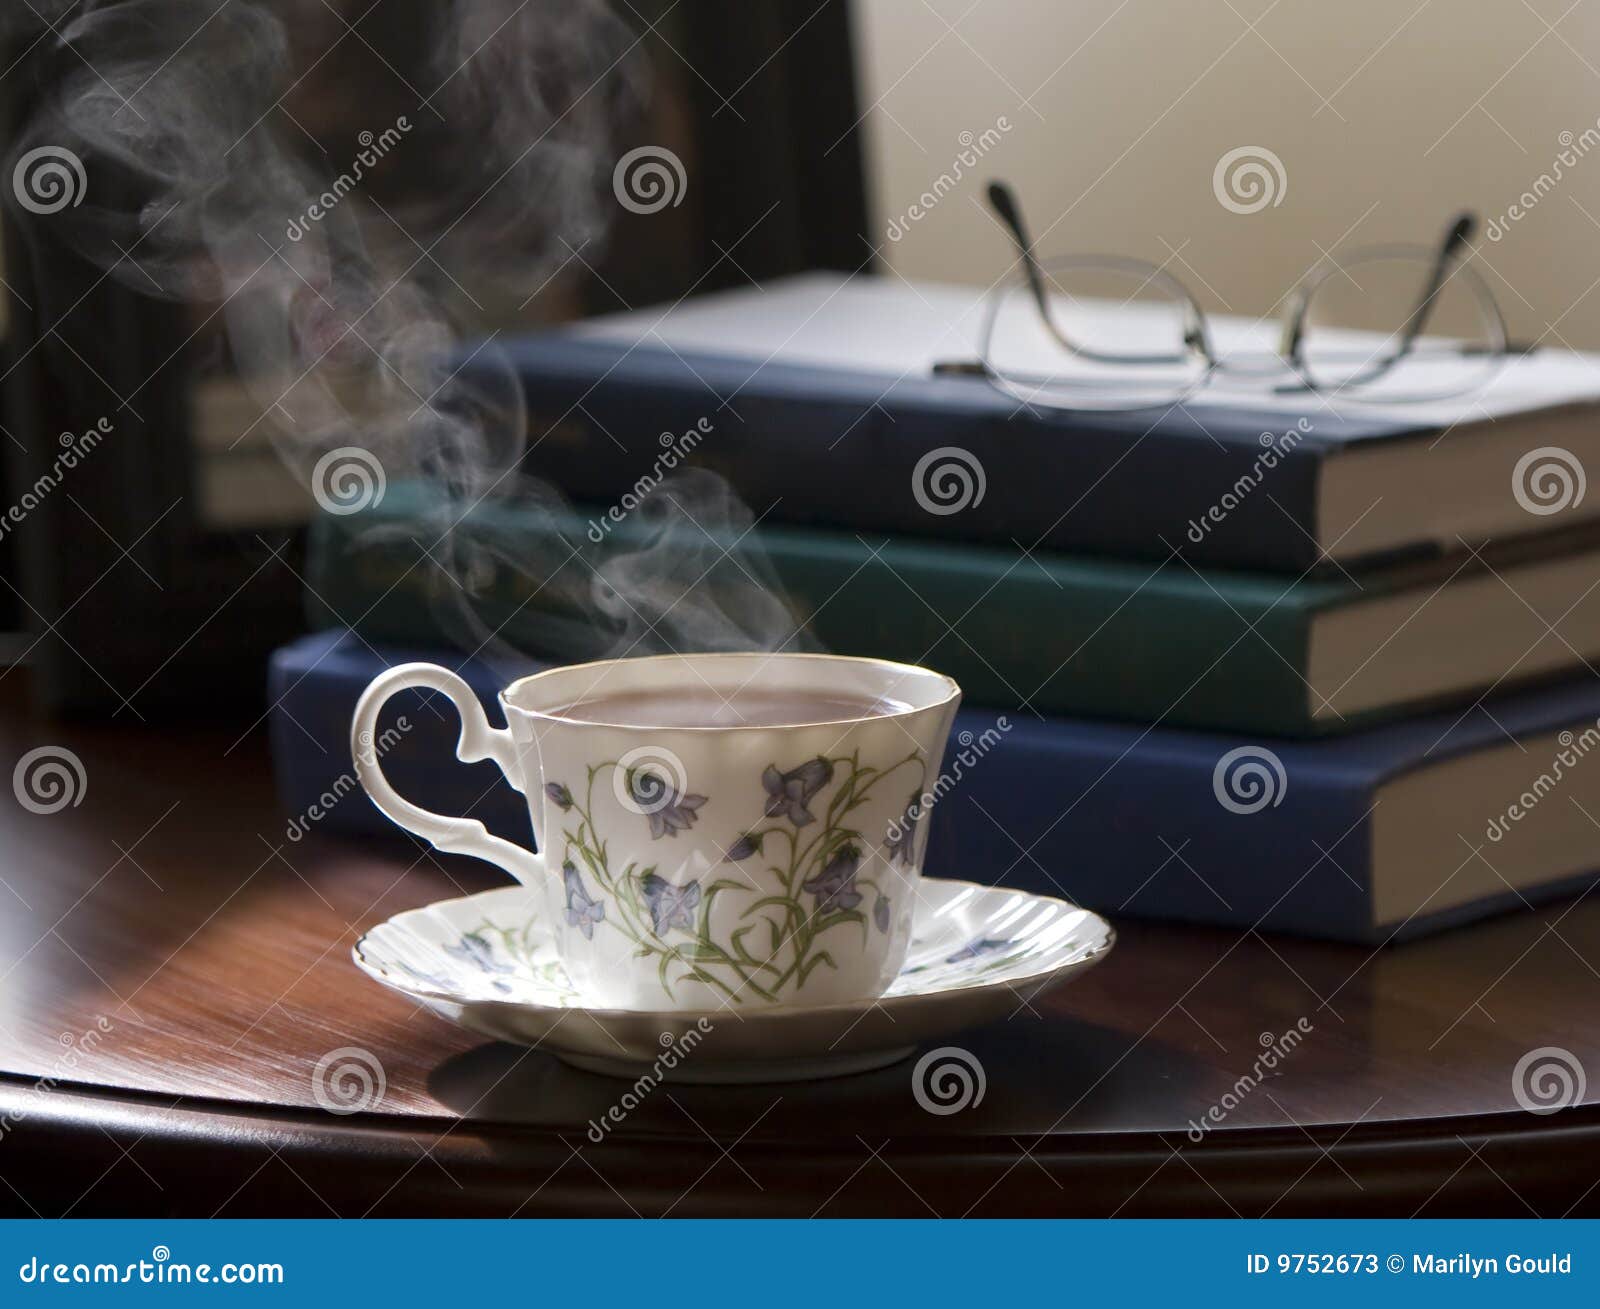 tea and books